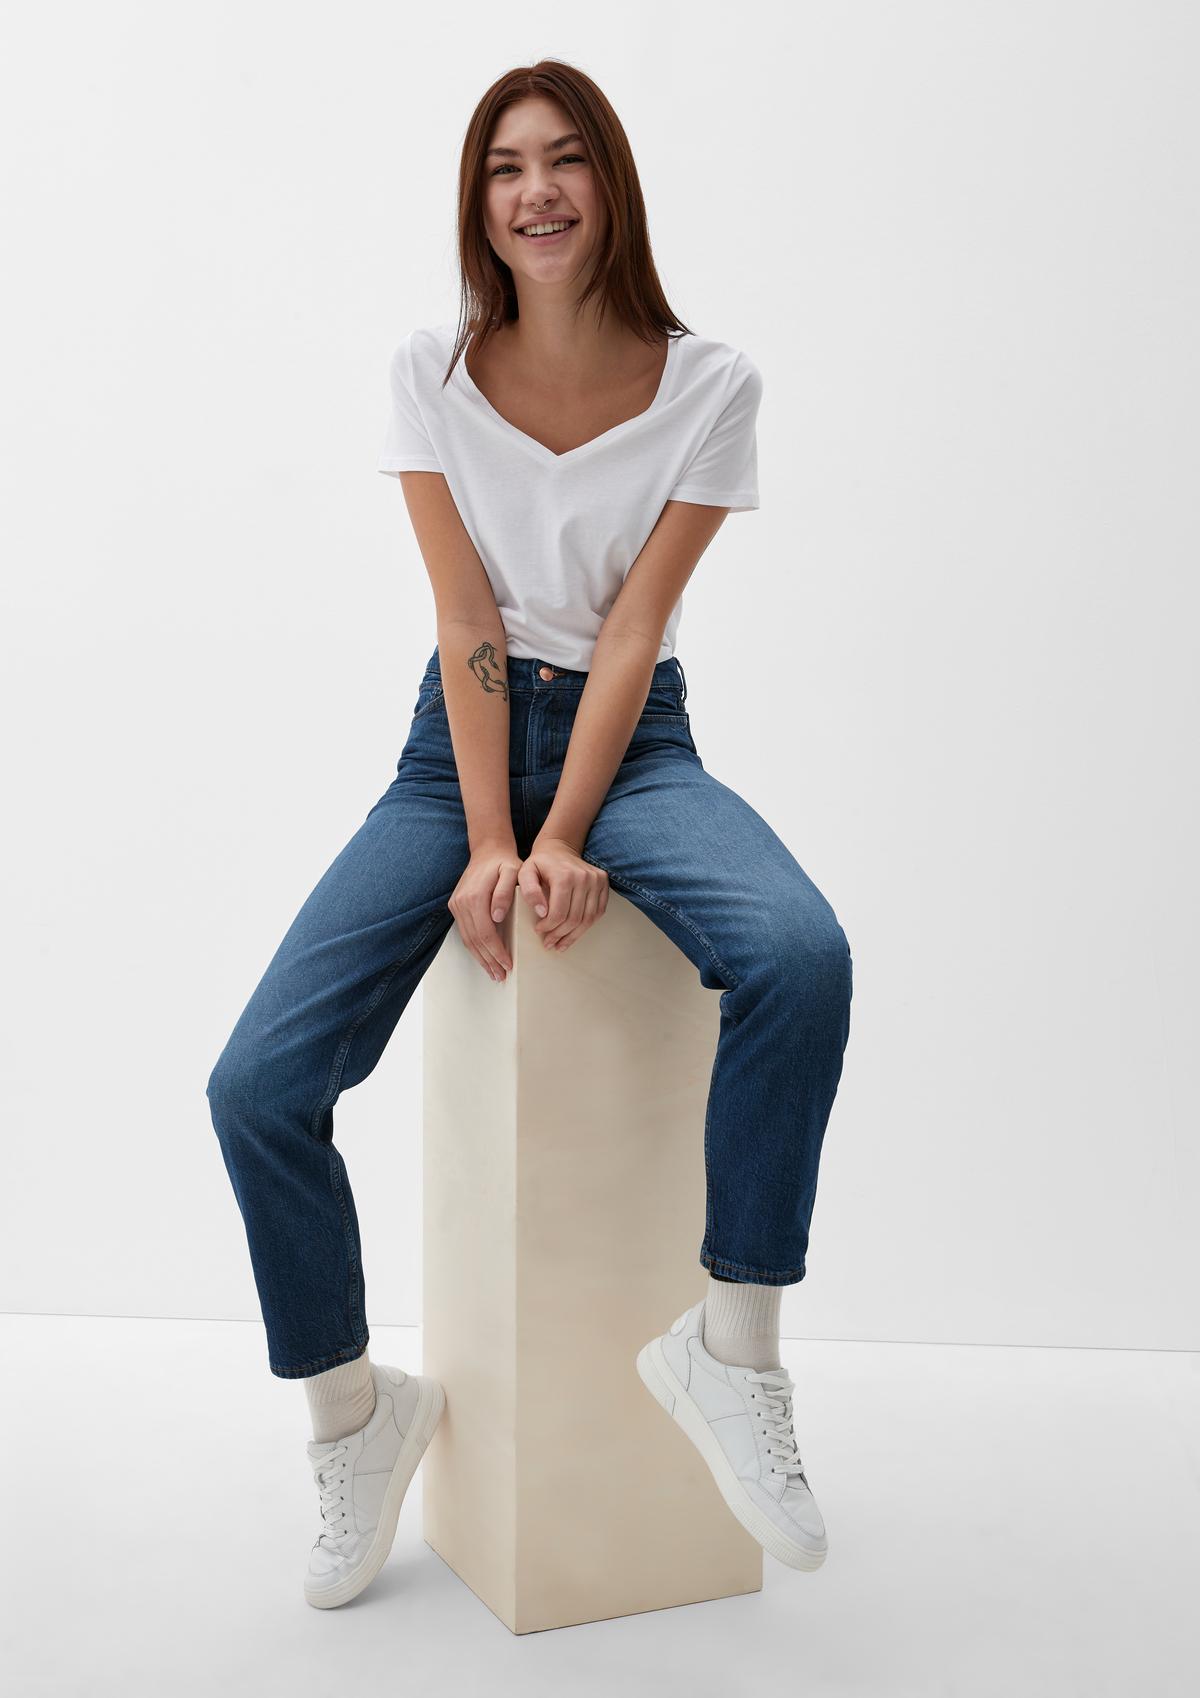 s.Oliver Ankle-Jeans Megan / Slim Fit / High Rise / Tapered Leg